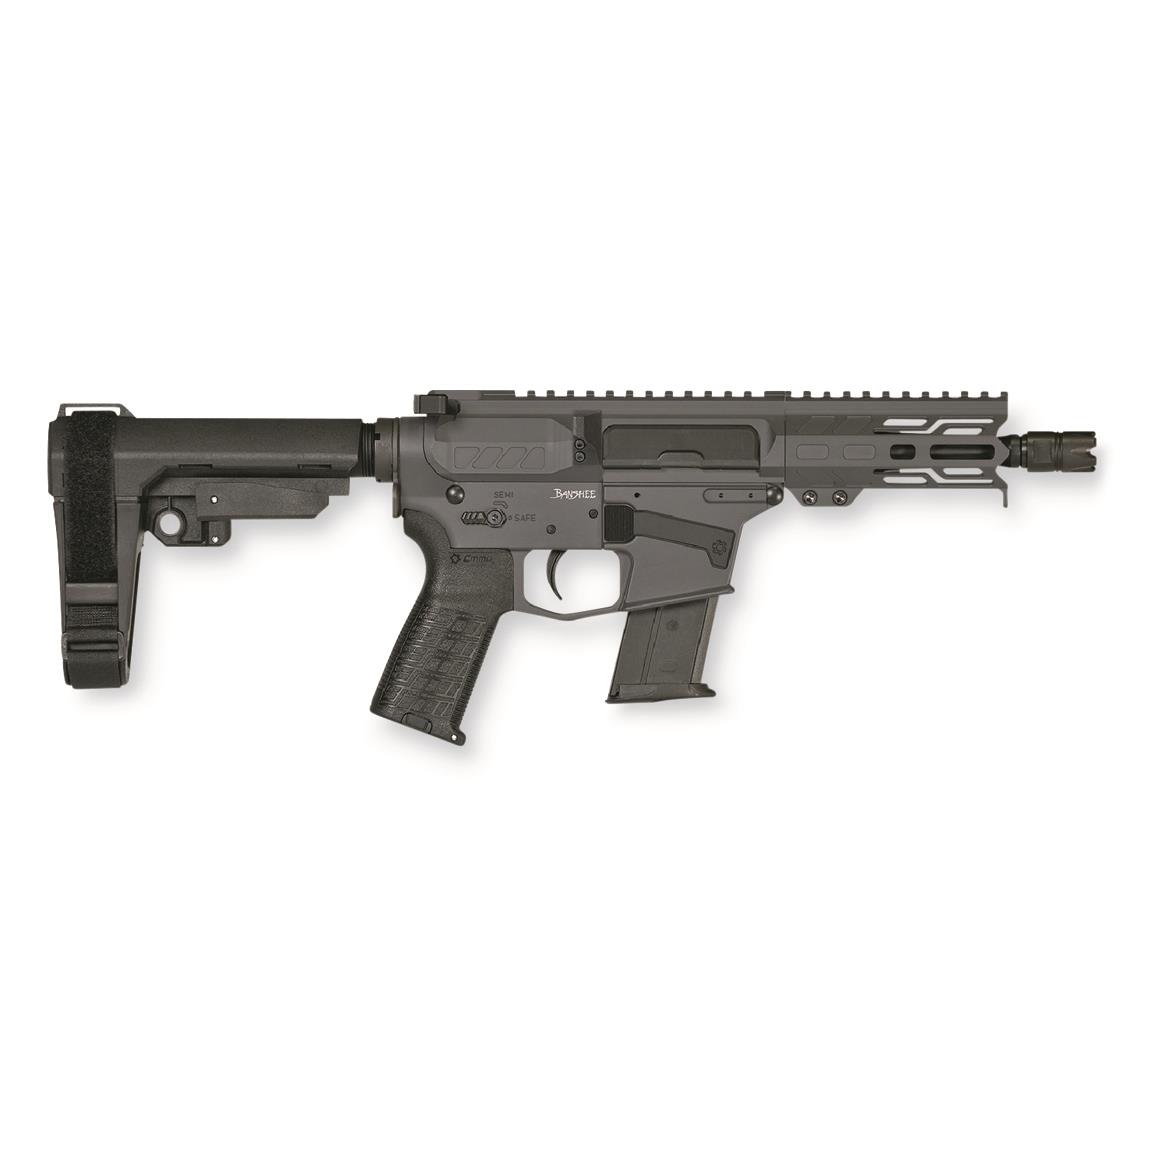 CMMG Banshee Mk57 AR Pistol, Semi-auto, 5.7x28mm, 5" BBL, 20+1 Rds., Sniper Gray, FN Five-seveN Mags